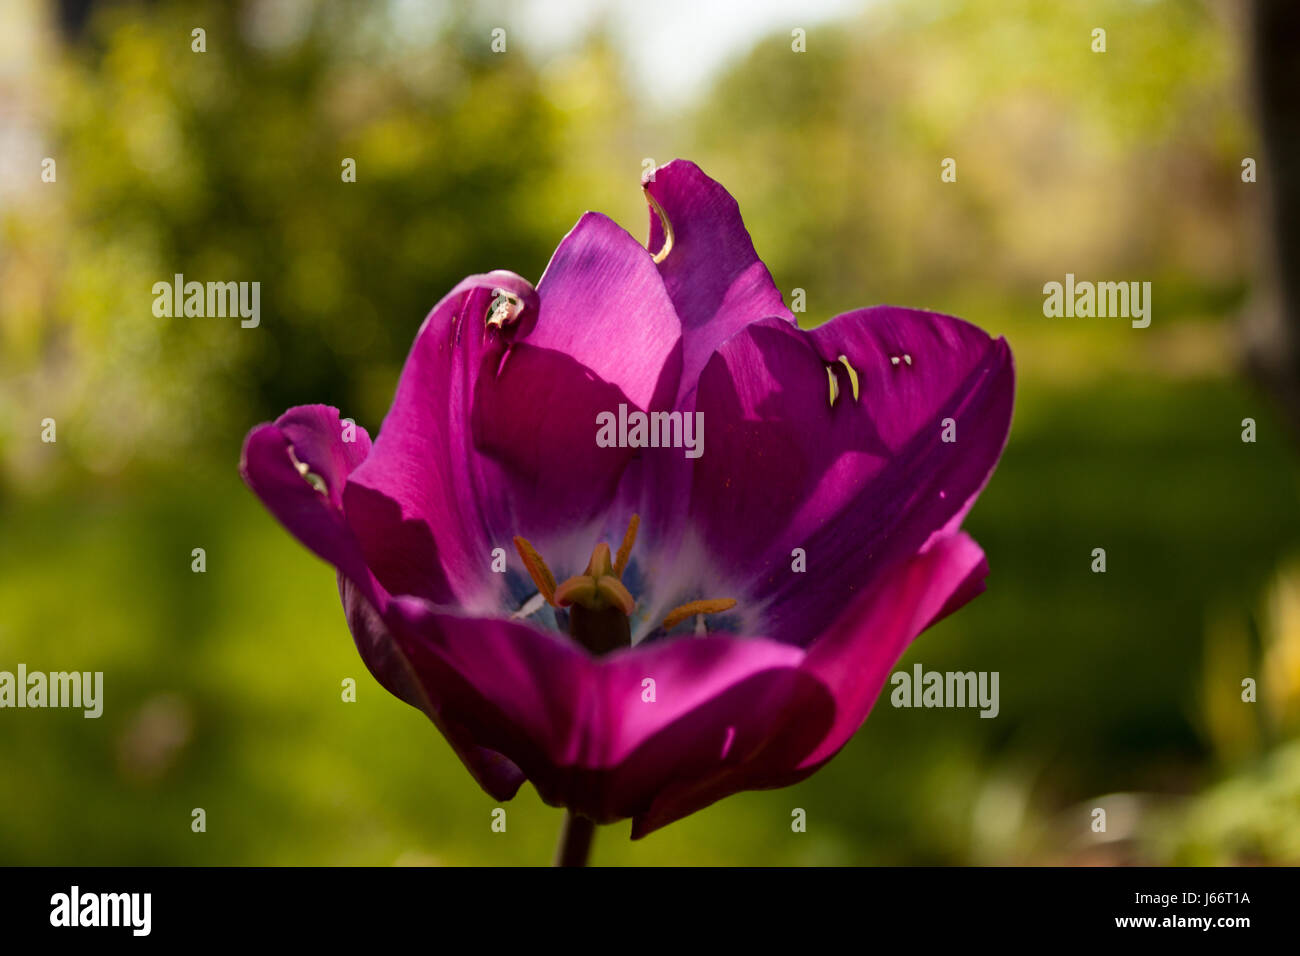 A Beautiful Close-up Photo of a purple tulip. Stock Photo